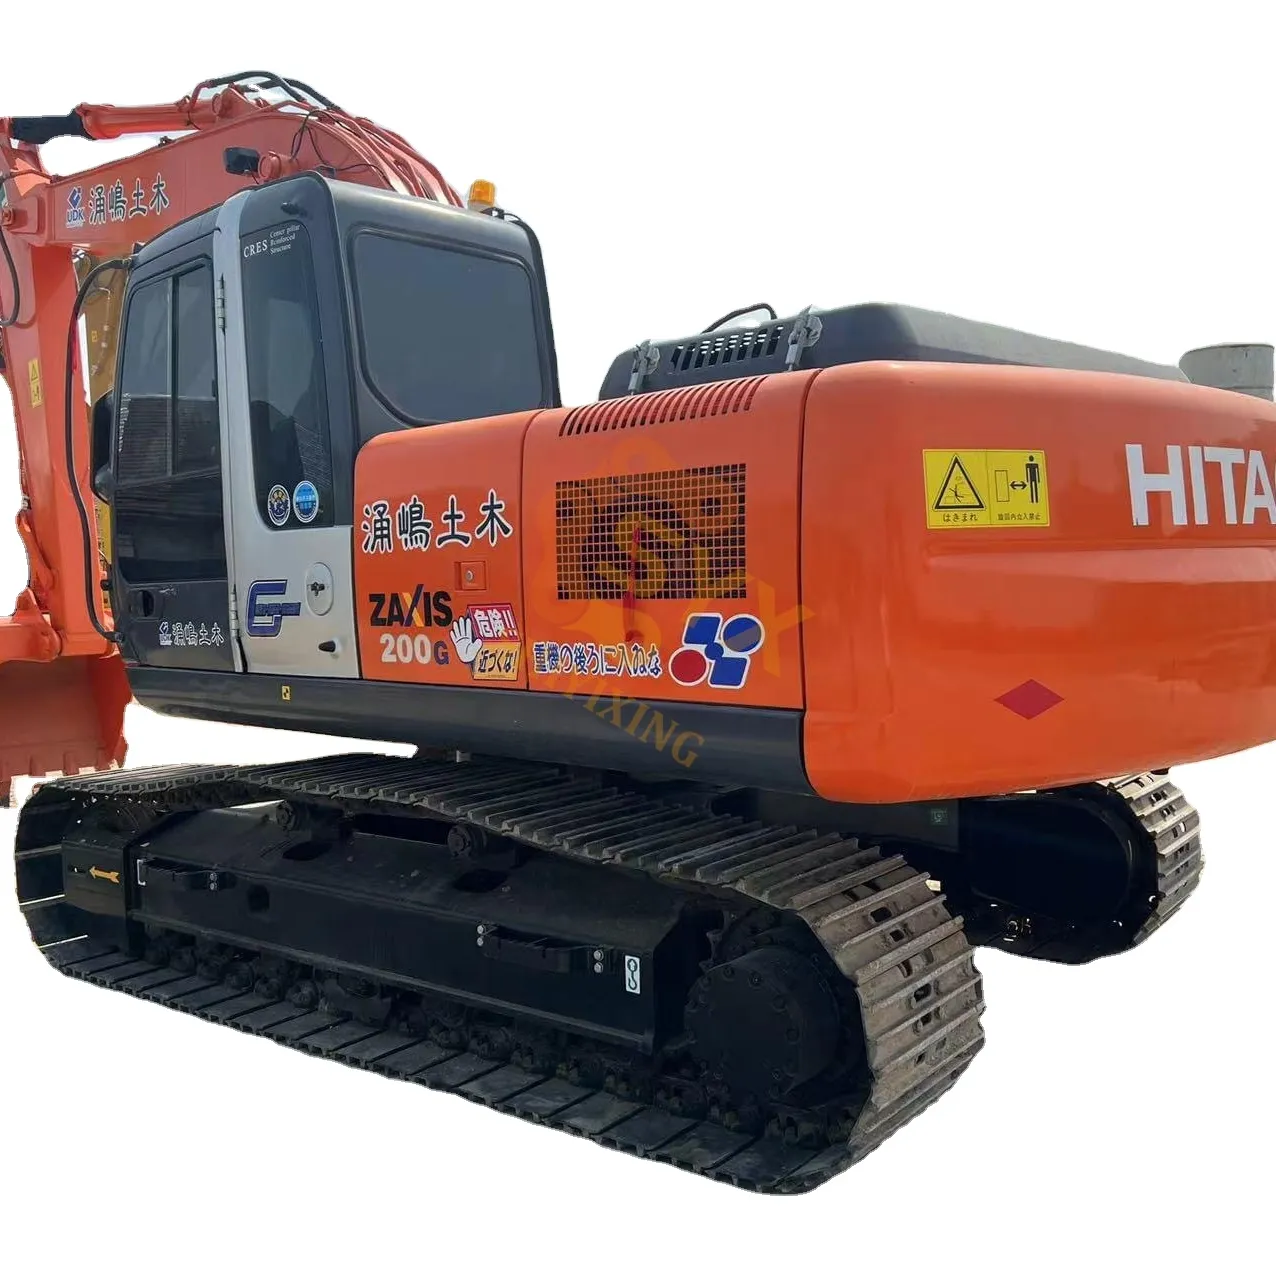 Excavadora Hitachi zaxis 200, de 20 toneladas maquinaria forestal, excavadora Hitachi usada a la venta,